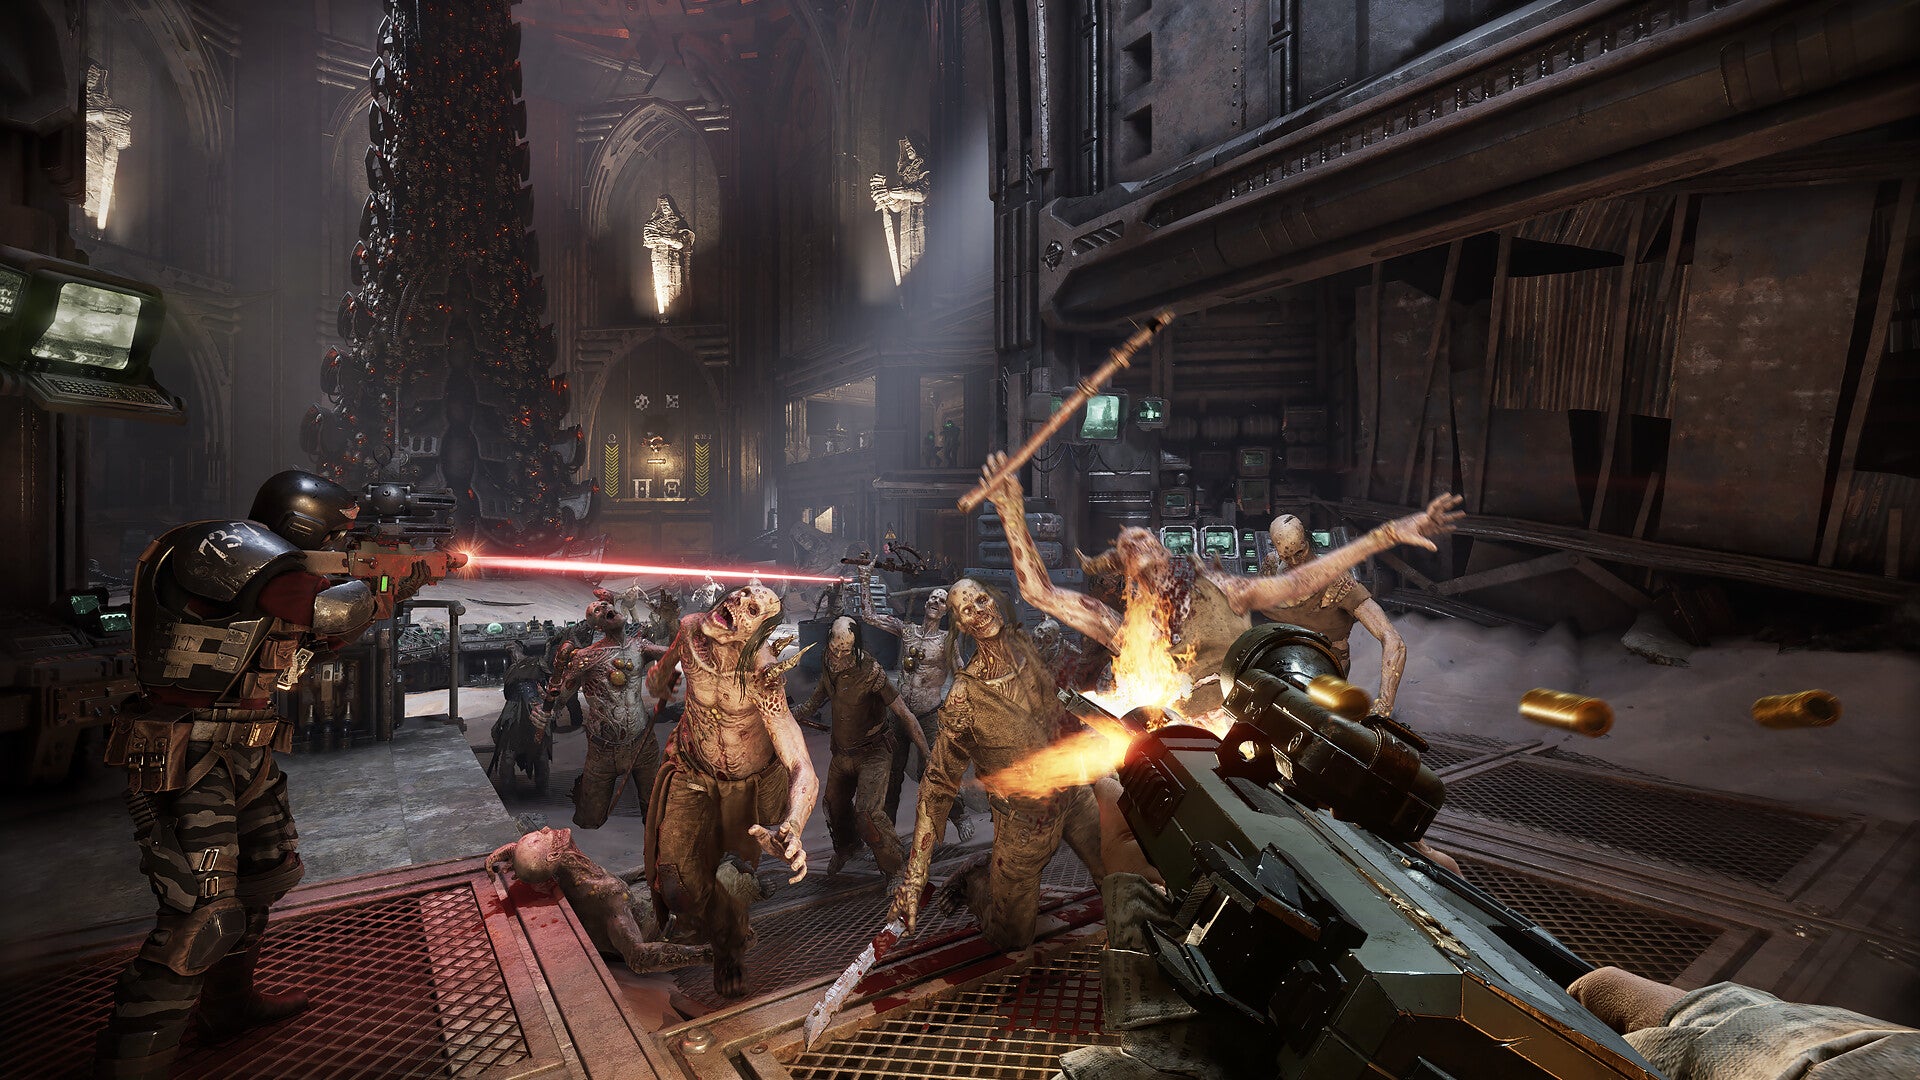 Warhammer 40K: Darktide gets Xbox Series X/S delay as dev admits it "fell short" of expectations - Eurogamer.net